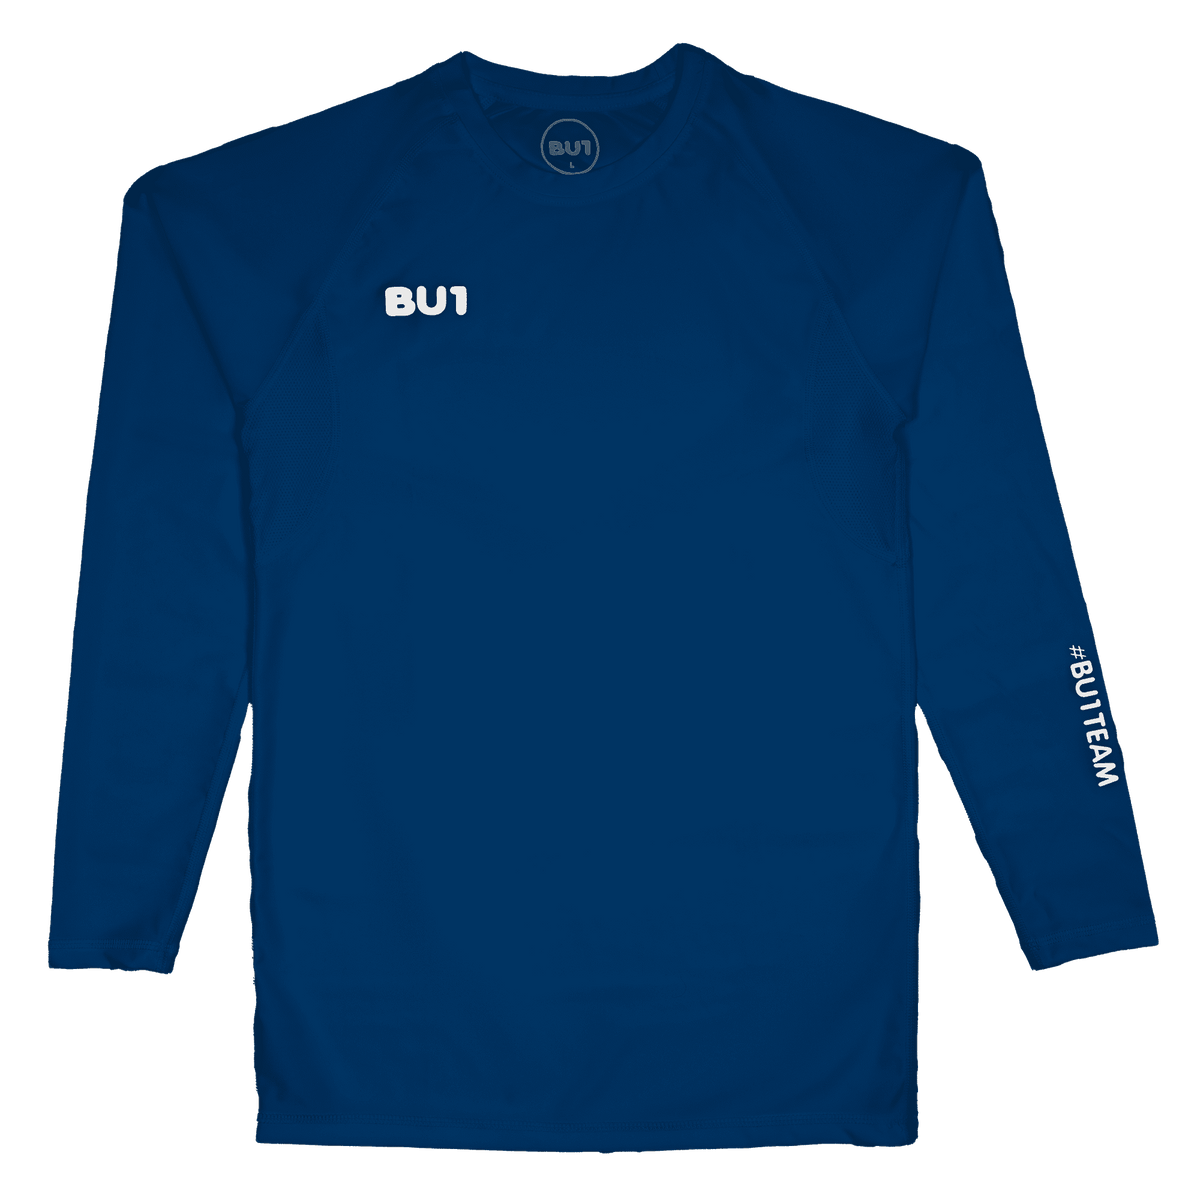 BU1 compression shirt blue